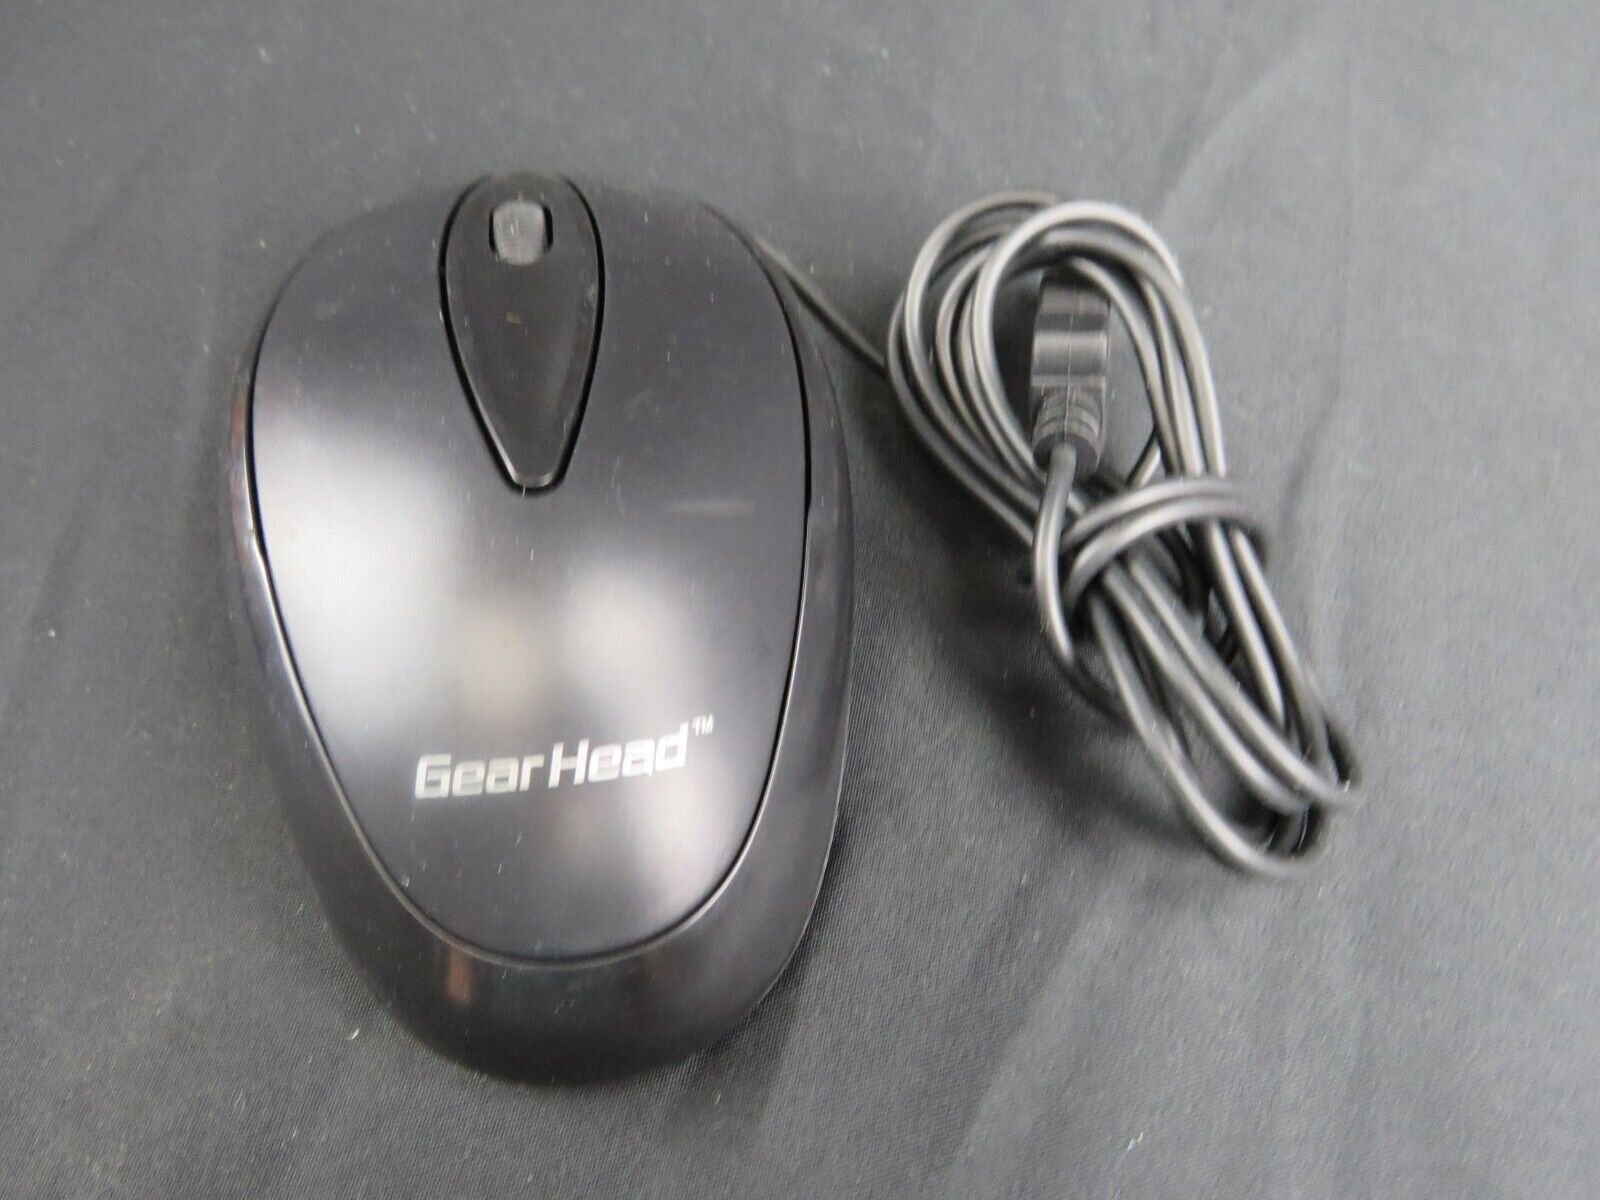  Optical Mouse Gear Head OM3400U 3 Button 800dpi